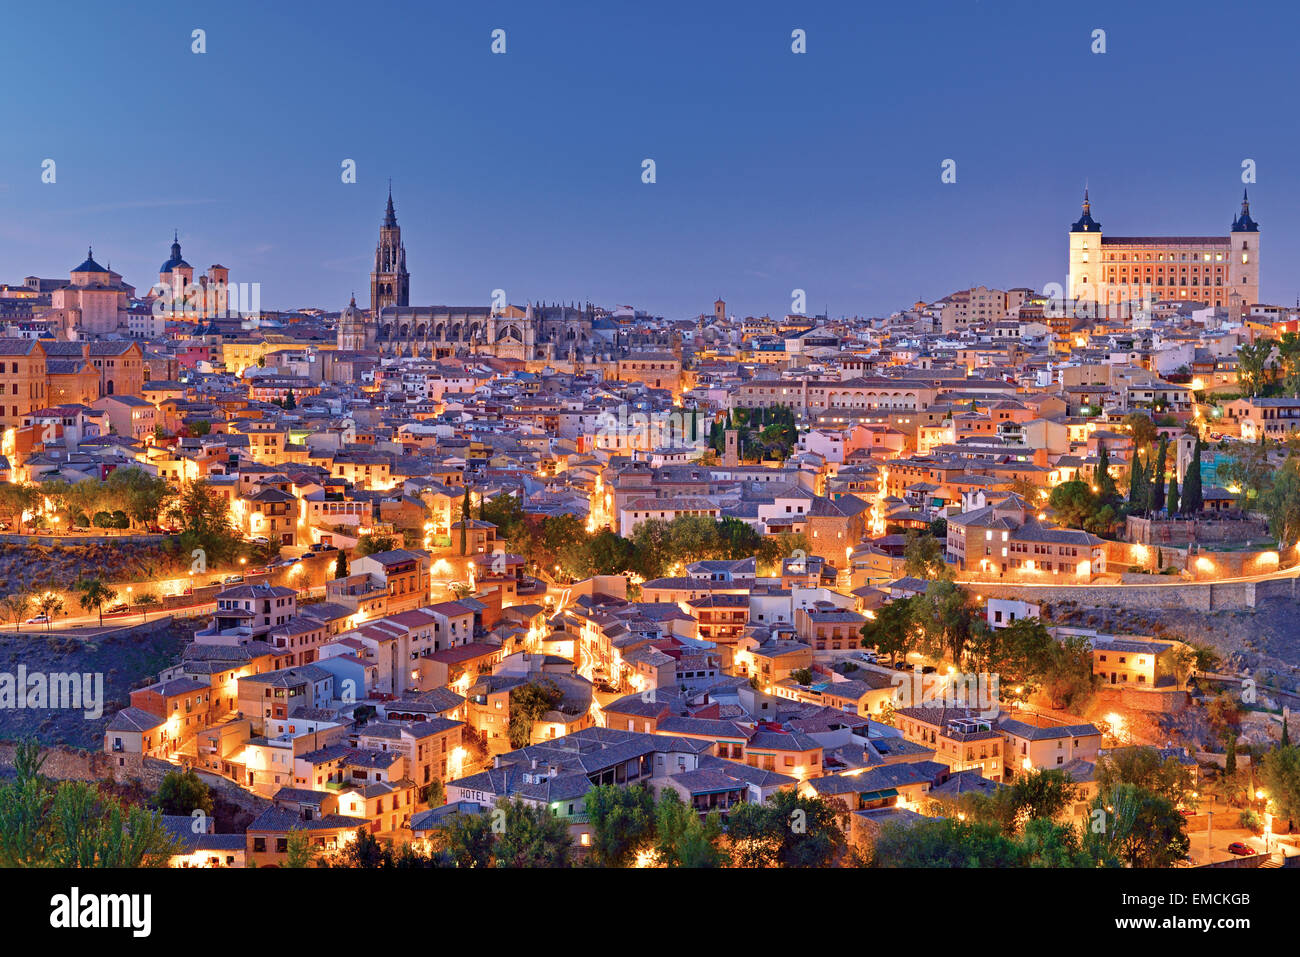 Spain, Castilla-La Mancha: Nocturnal view to the historic town of Toledo Stock Photo